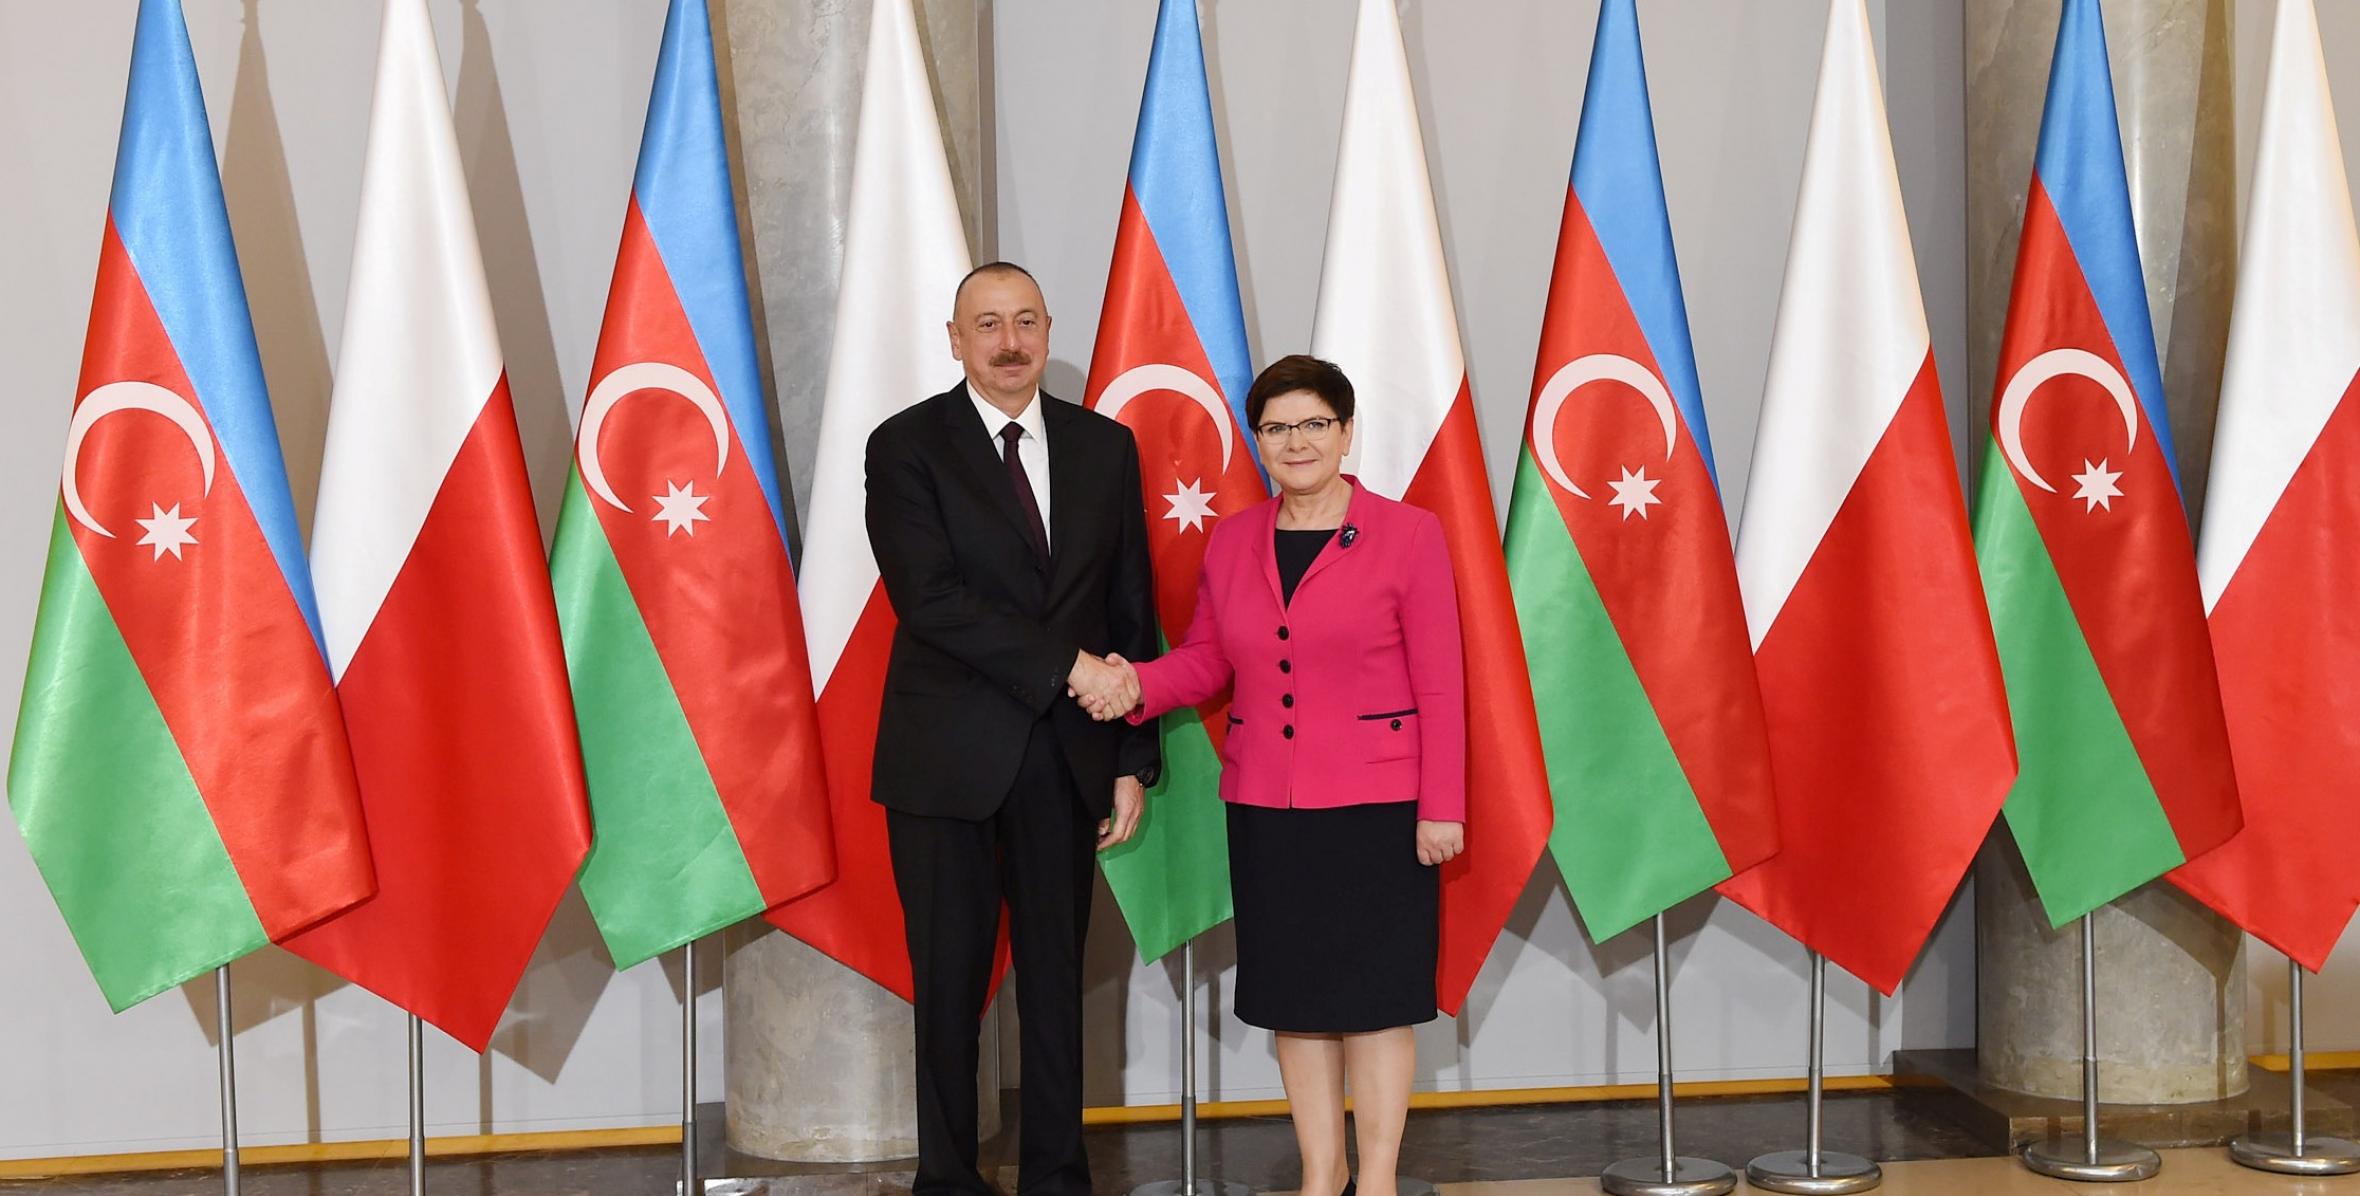 Ilham Aliyev met with Polish Prime Minister in Warsaw